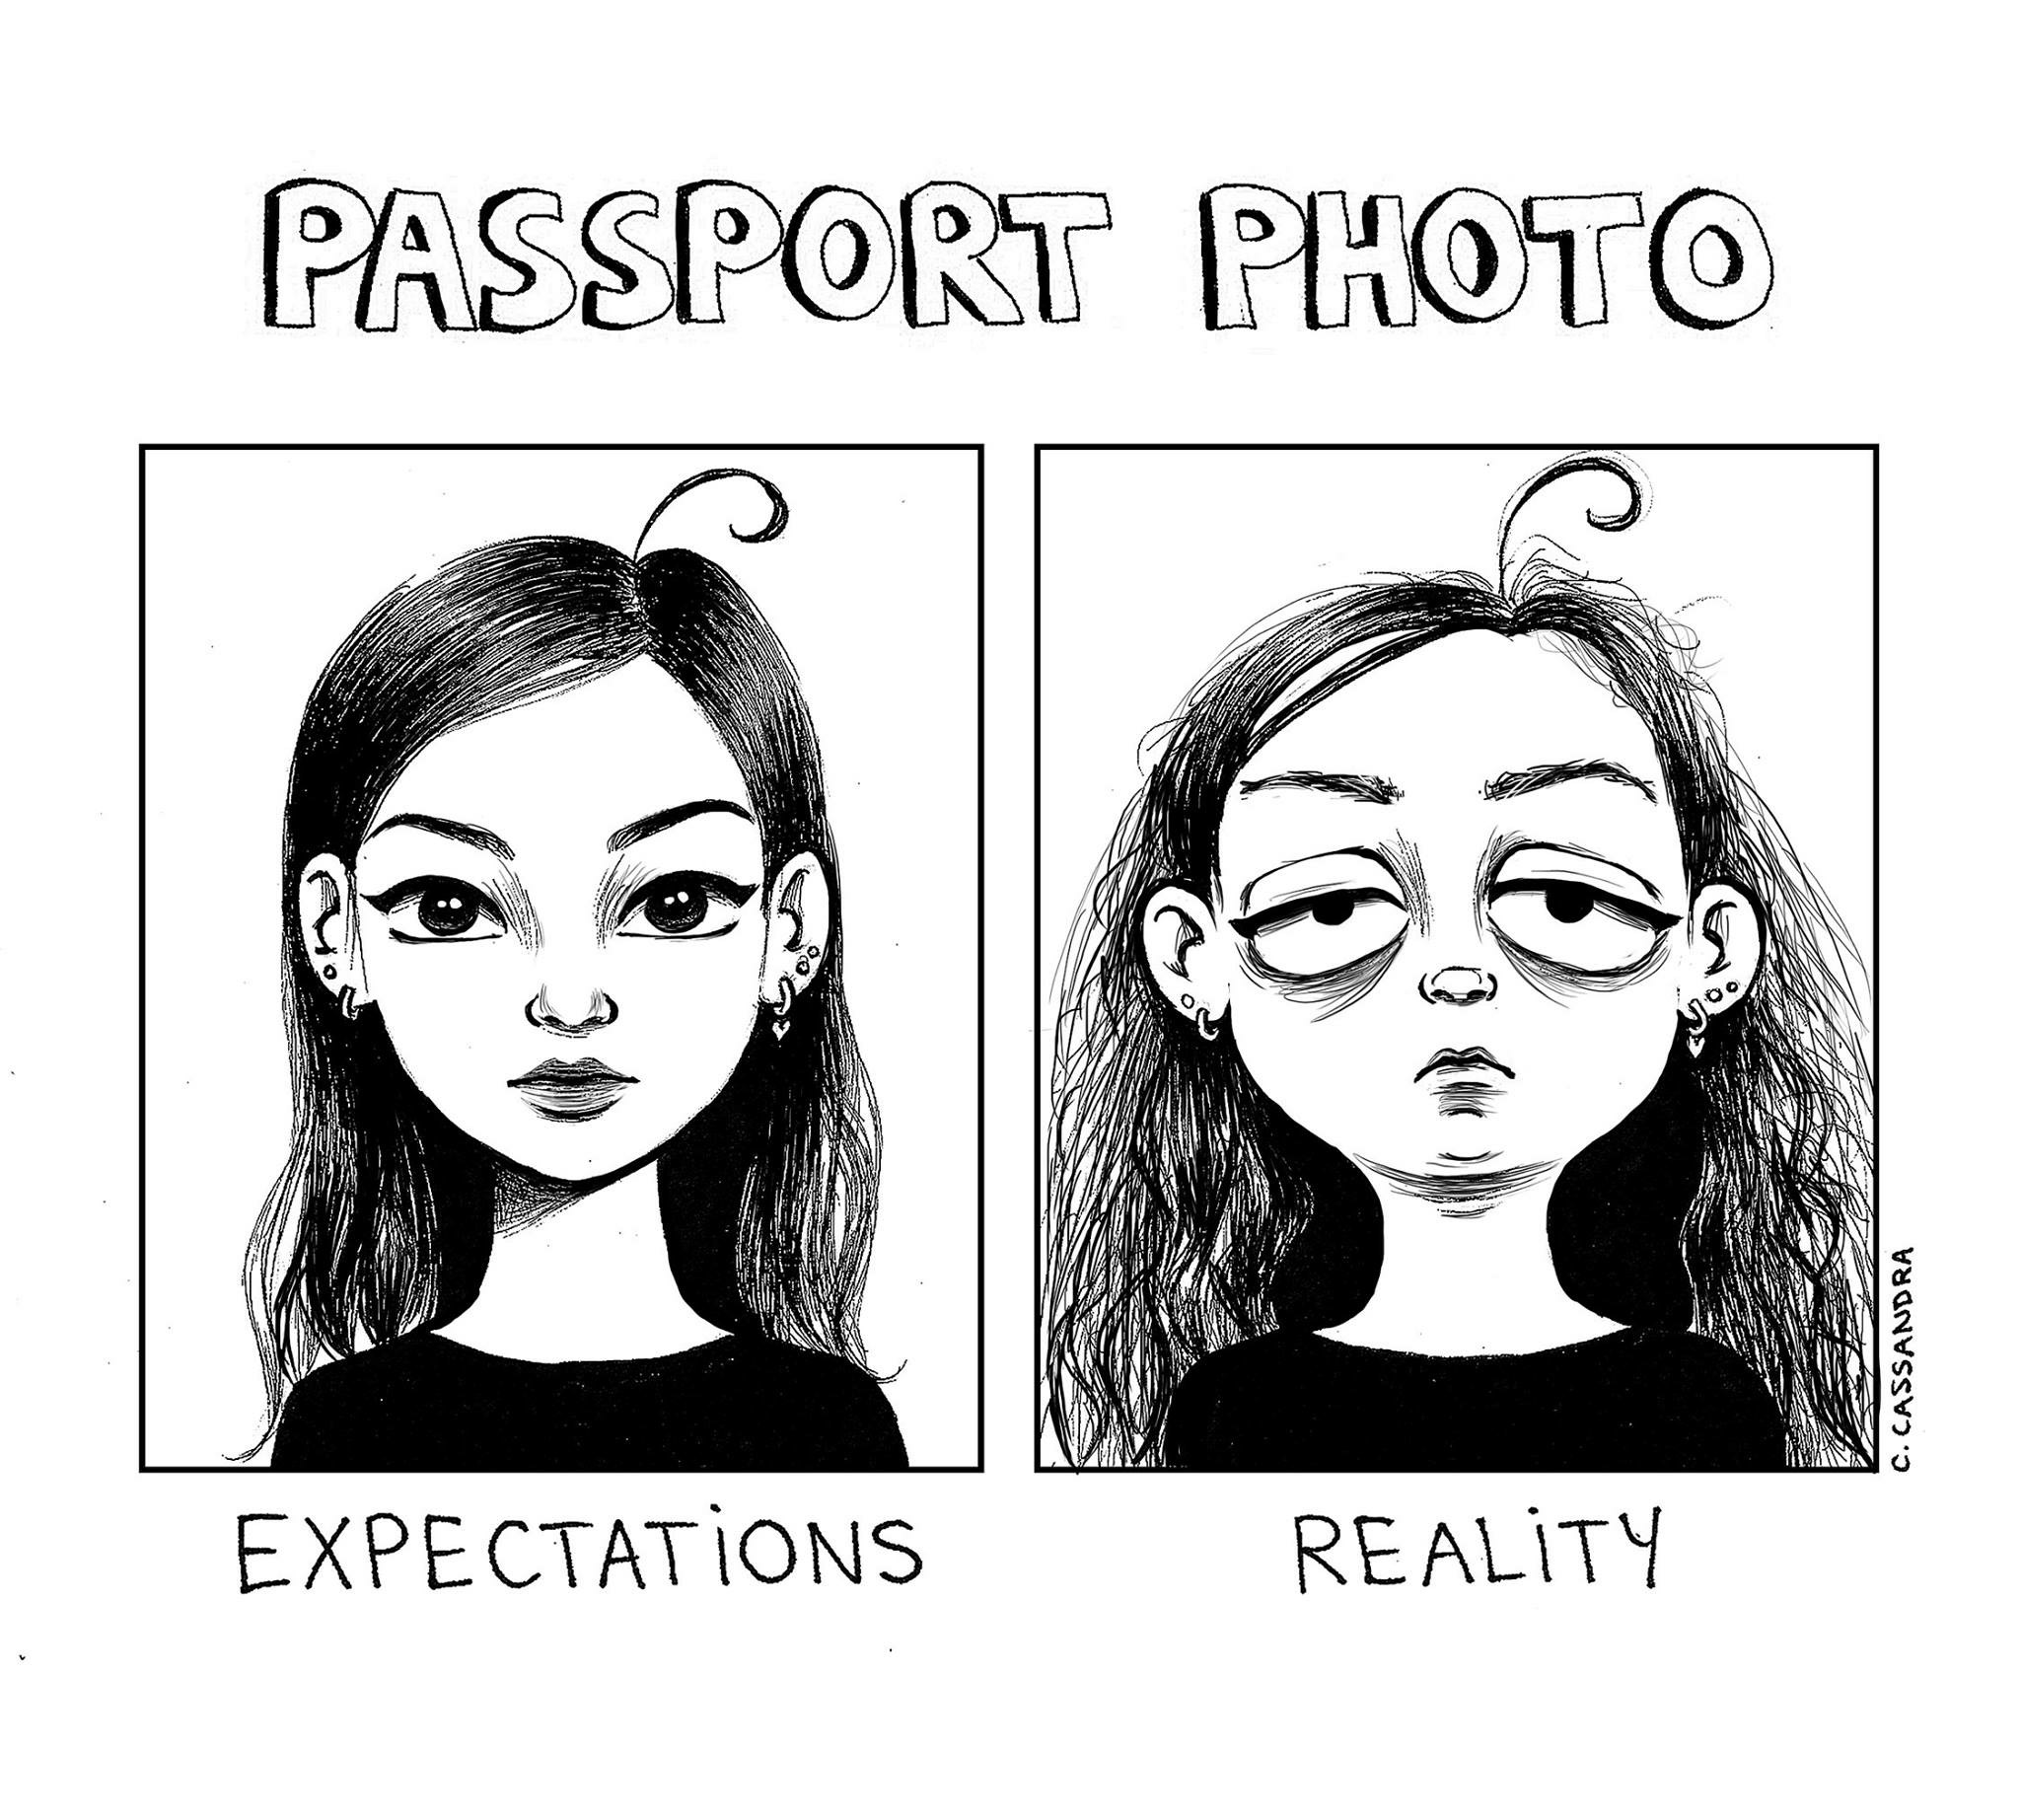 female problems funny - Passport Photo C. Cassandra Expectations Reality